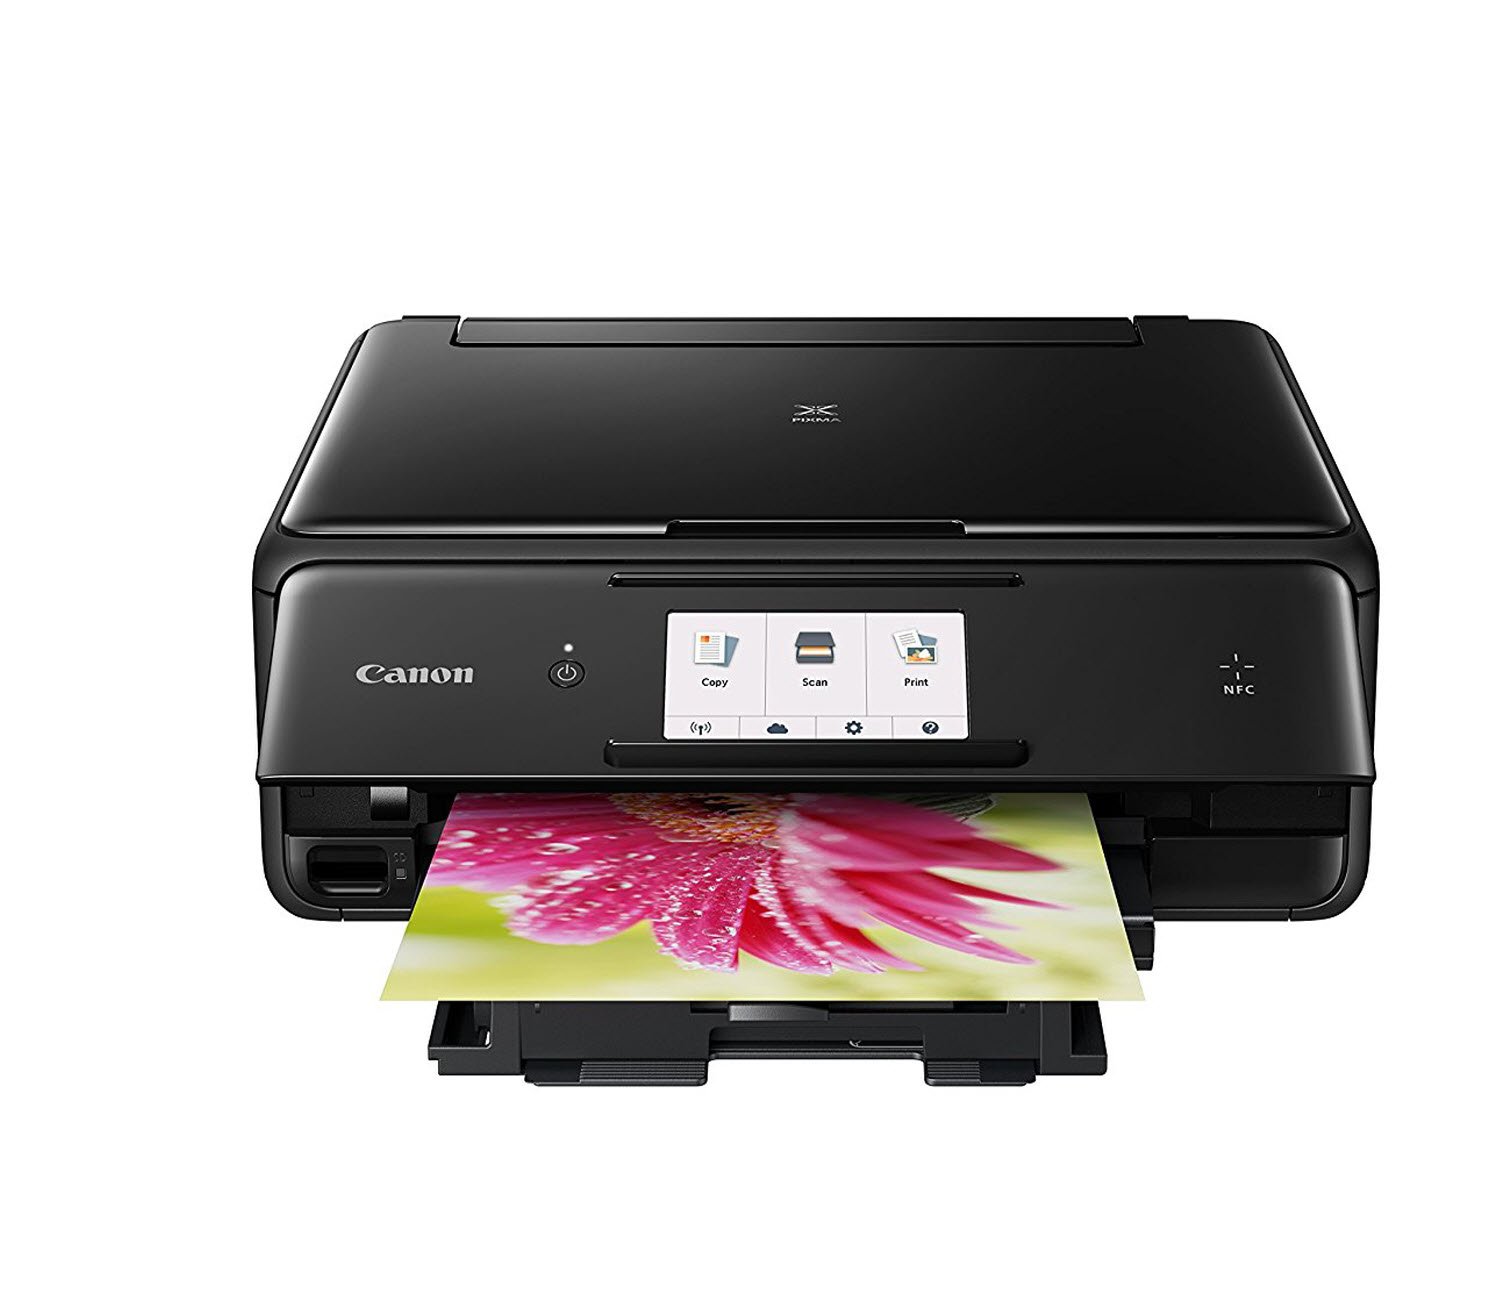 Canon Pixma TS8020 Wireless Inkjet All-in-One Printer - Black